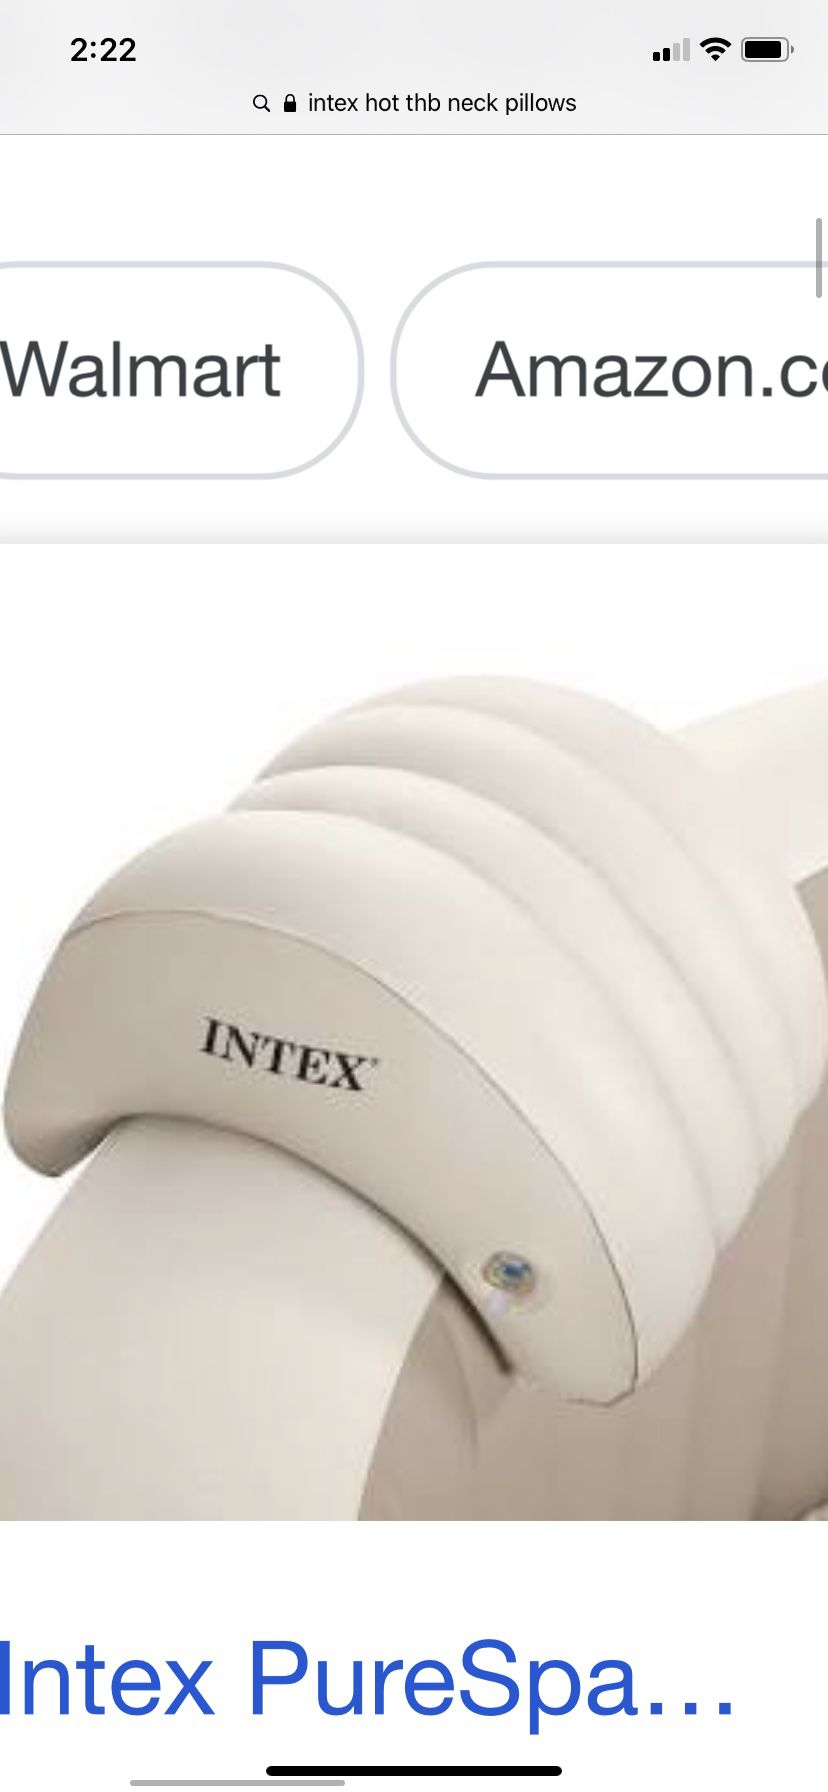 INTEX hot tub neck pillows